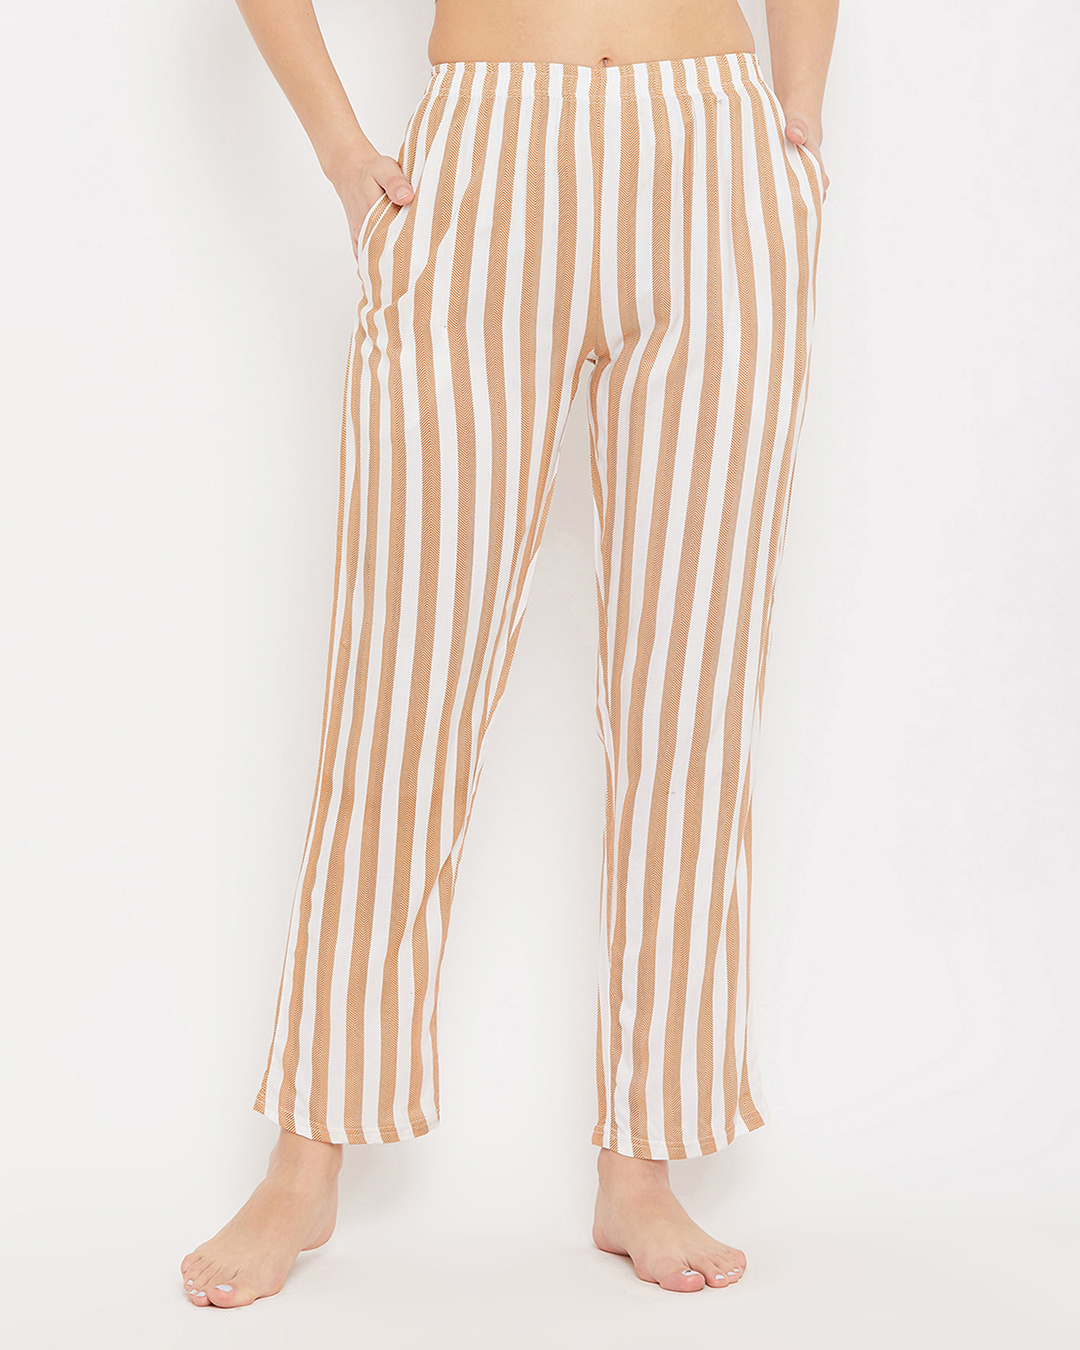 Buy Clovia Sassy Stripes Pyjamas in Beige Online in India at Bewakoof